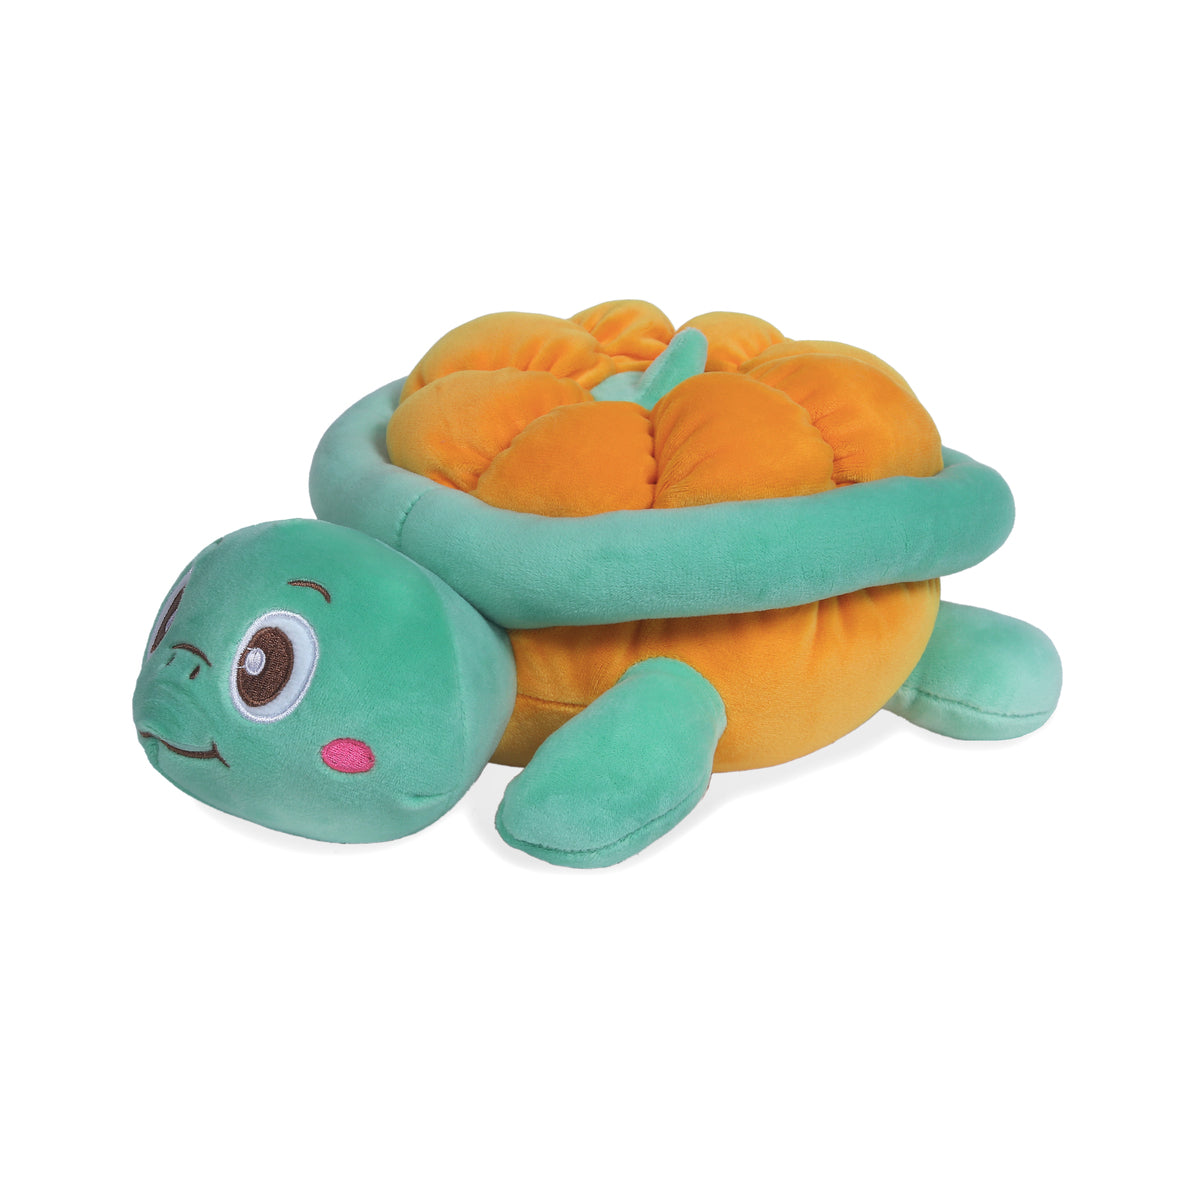 Pumpkin The Playful Turtle